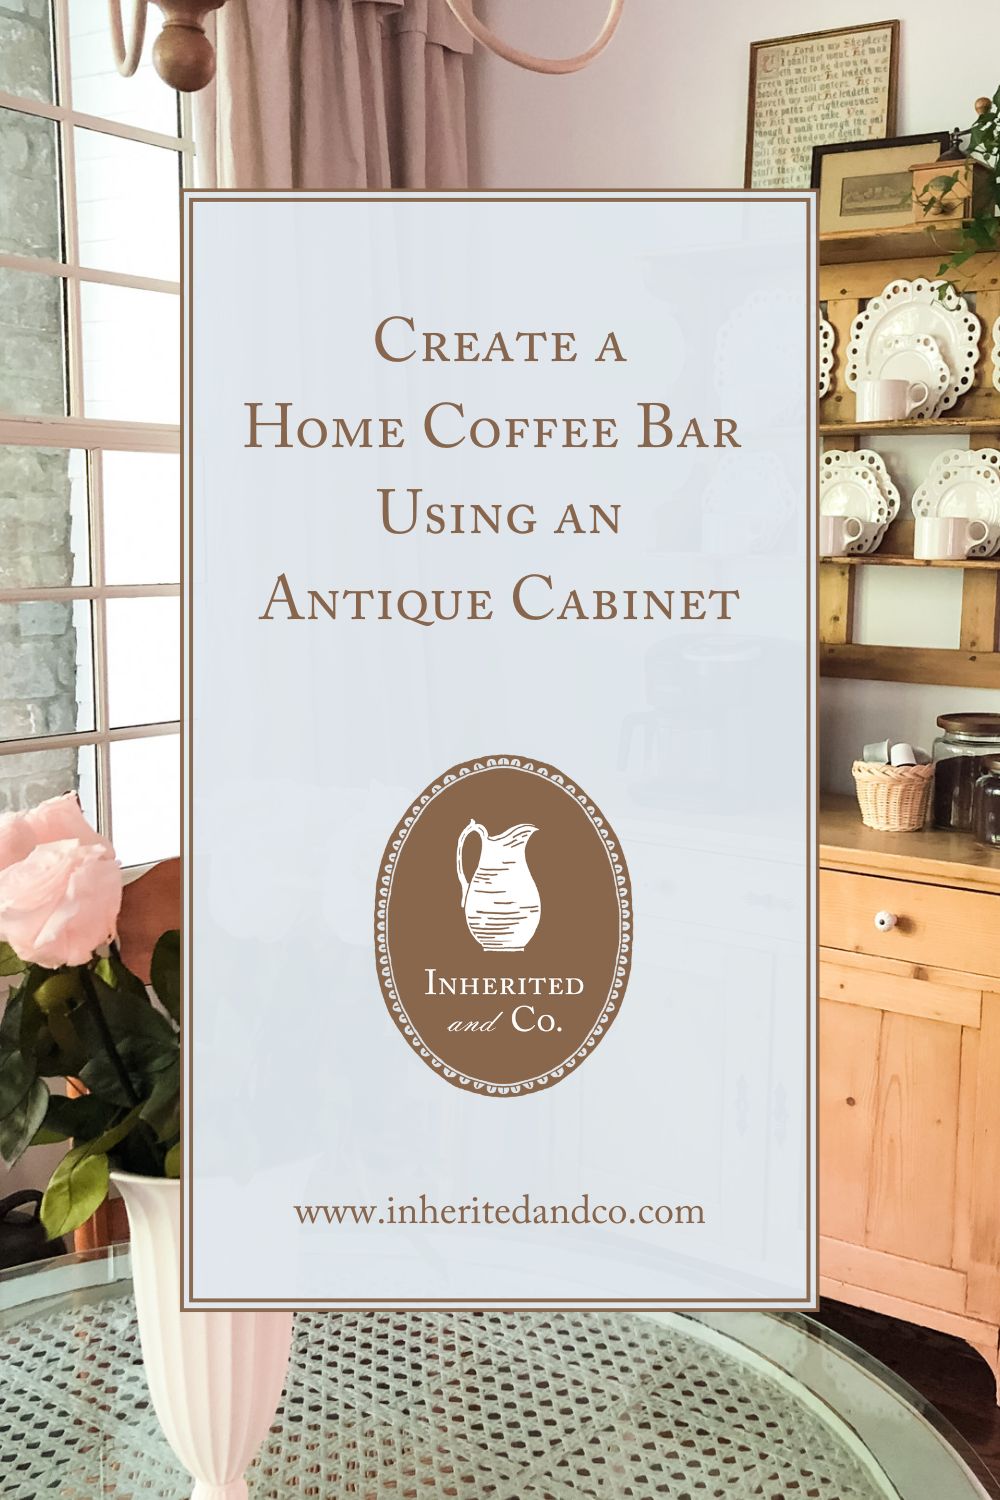 "Create a Home Coffee Bar Using an Antique Cabinet"